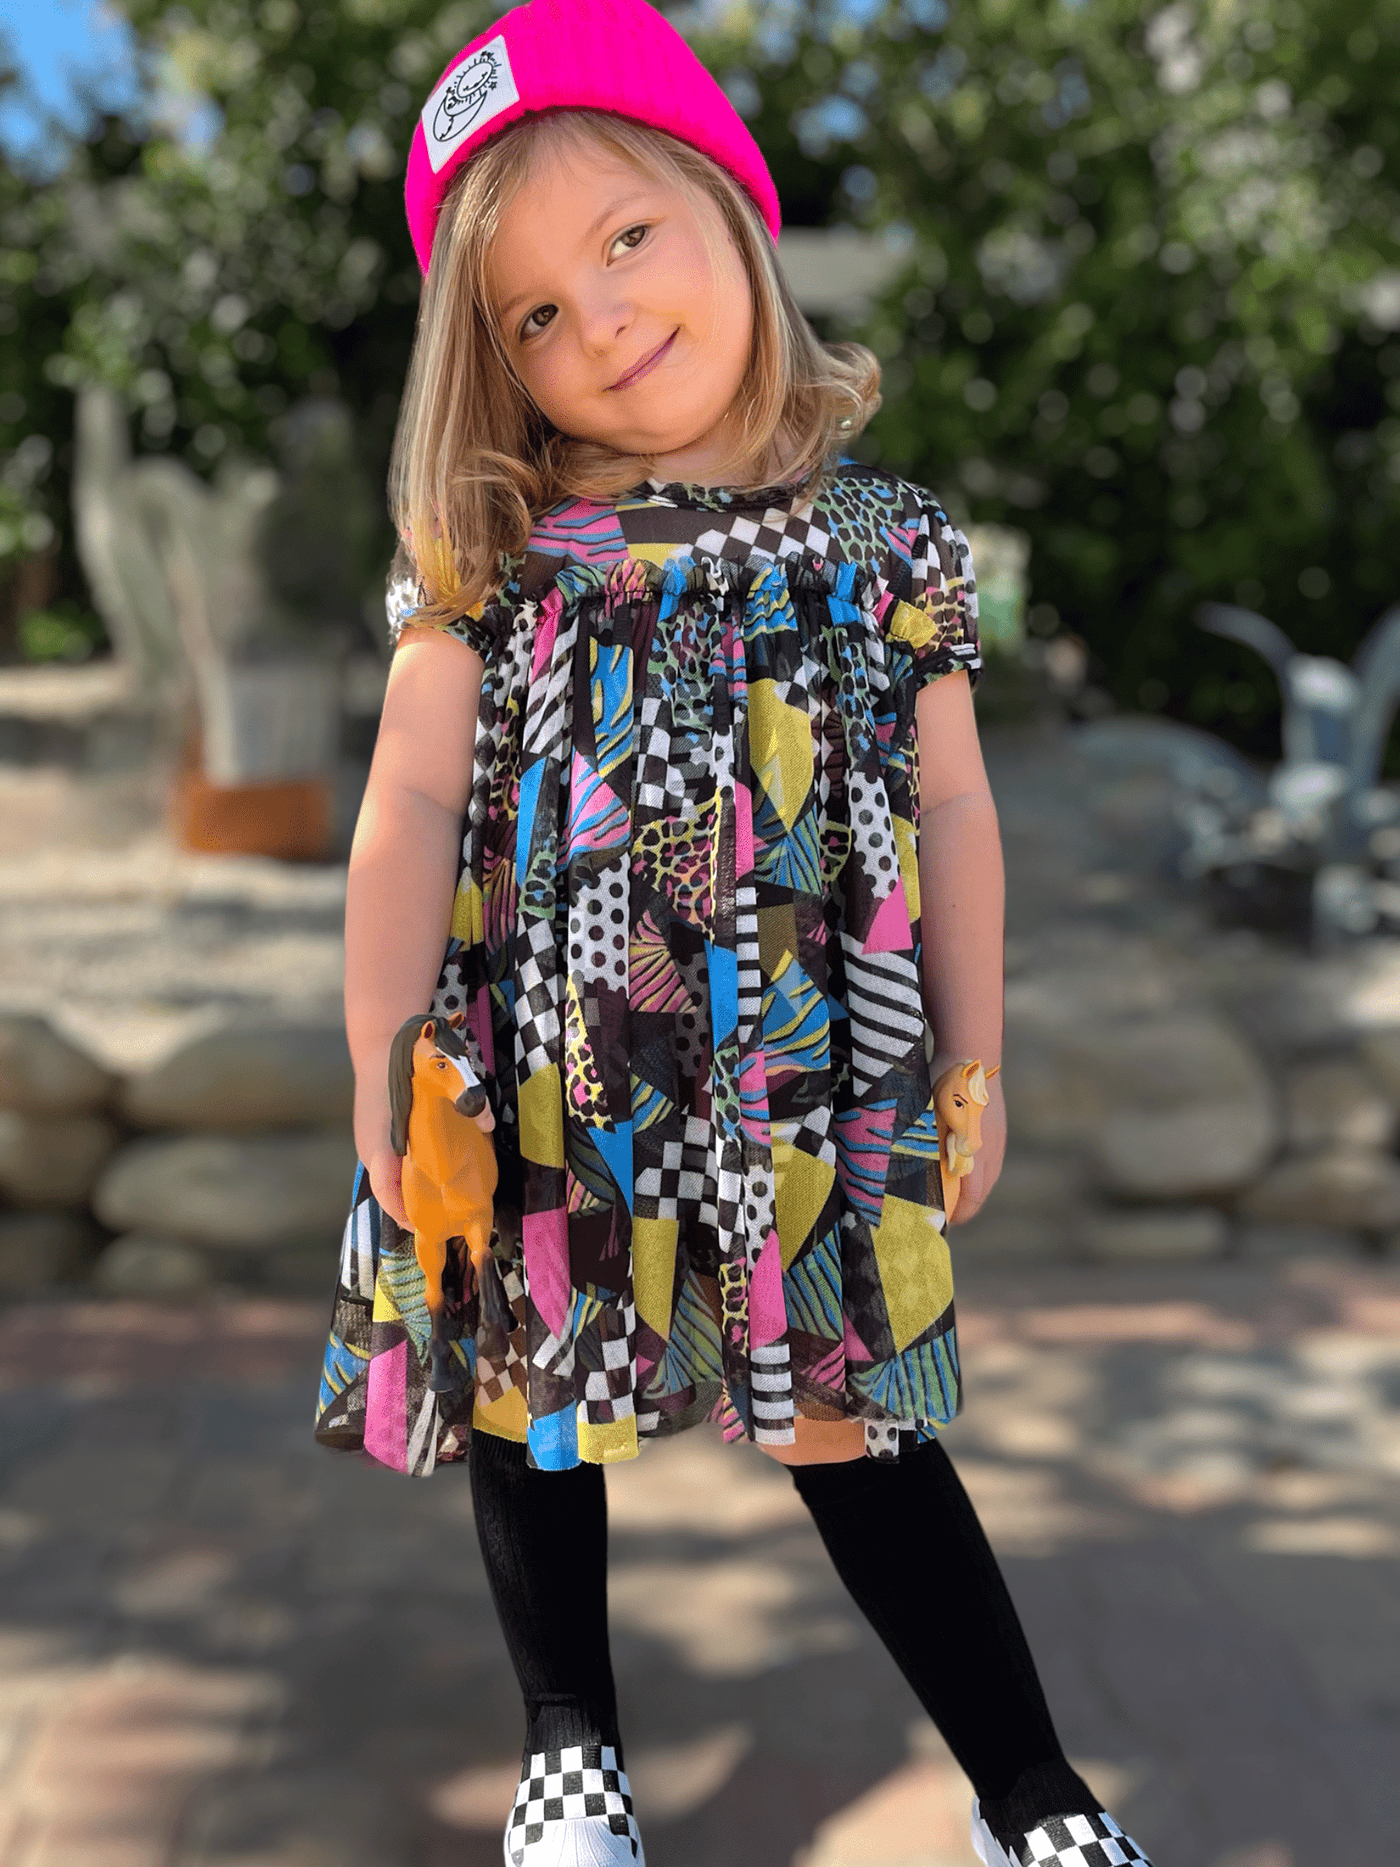 Best Day Ever Kids Baby & Toddler Dresses Juniper Dress - Totally Rad buy online boutique kids clothing